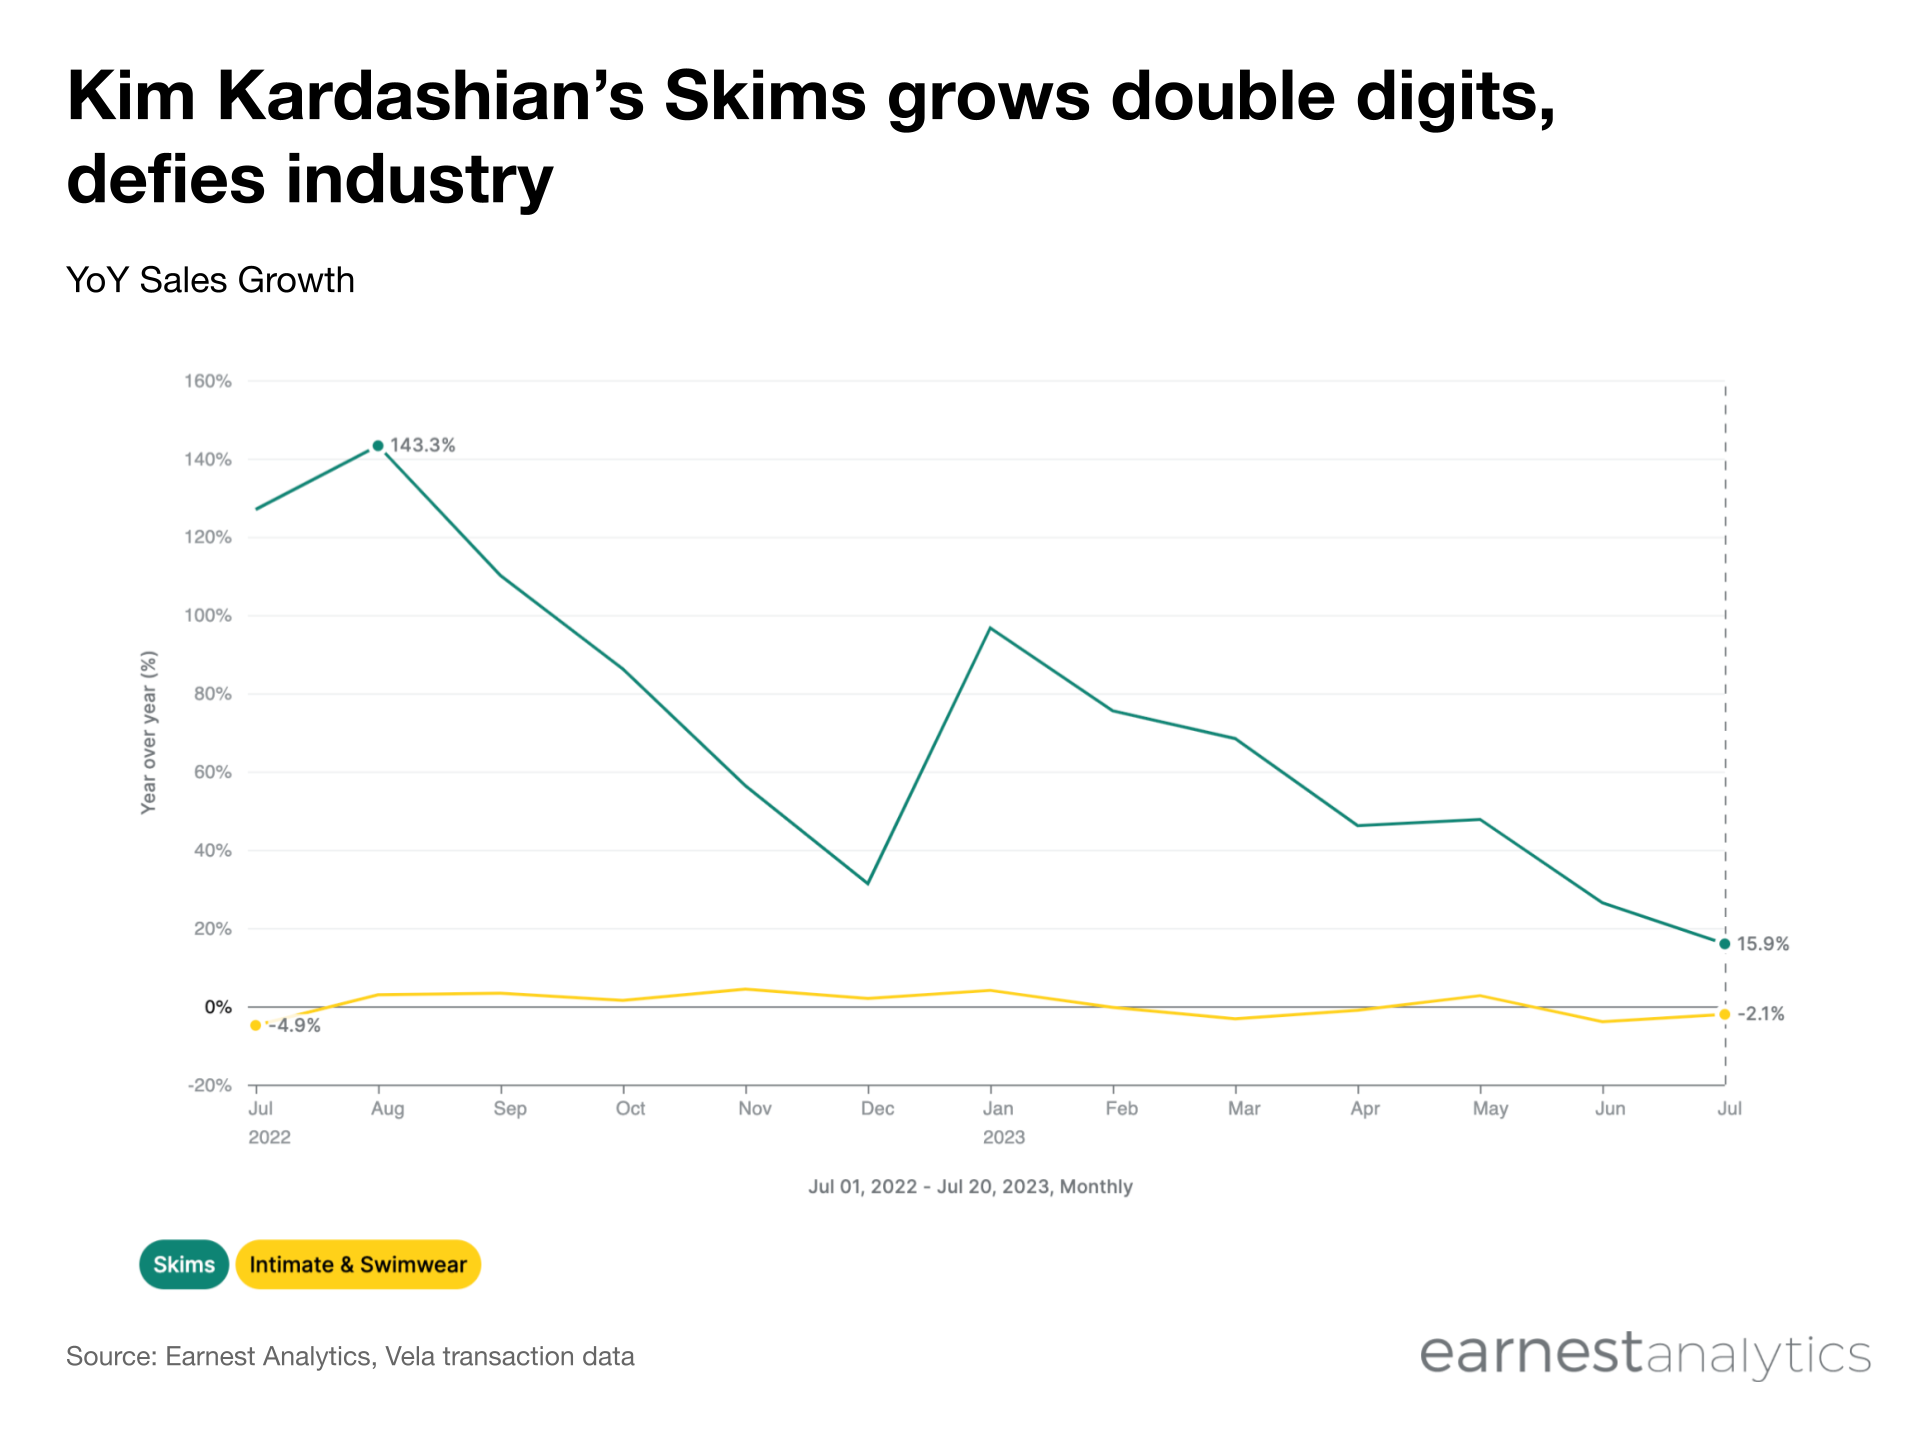 Kim Kardashian's Skims grows double digits, defies industry